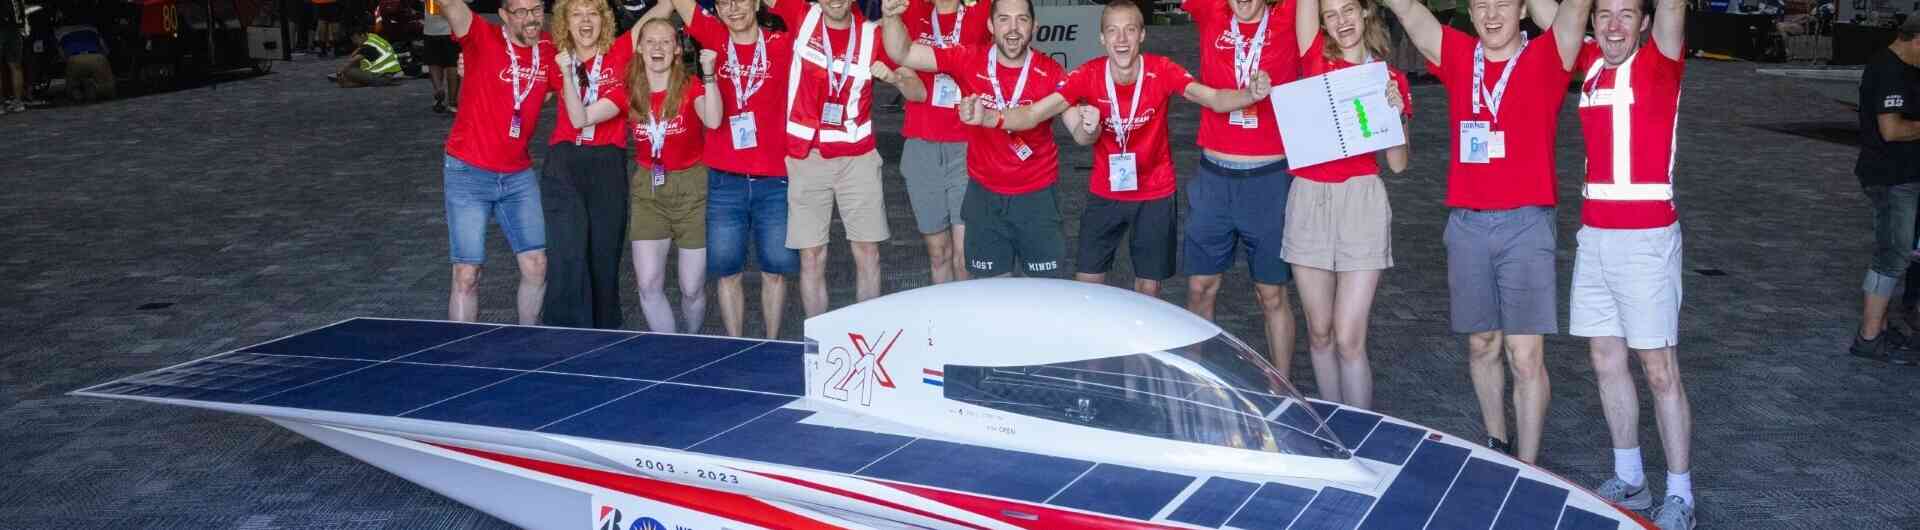 Solar Team Twente overwint scrutionering Solar Team Twente